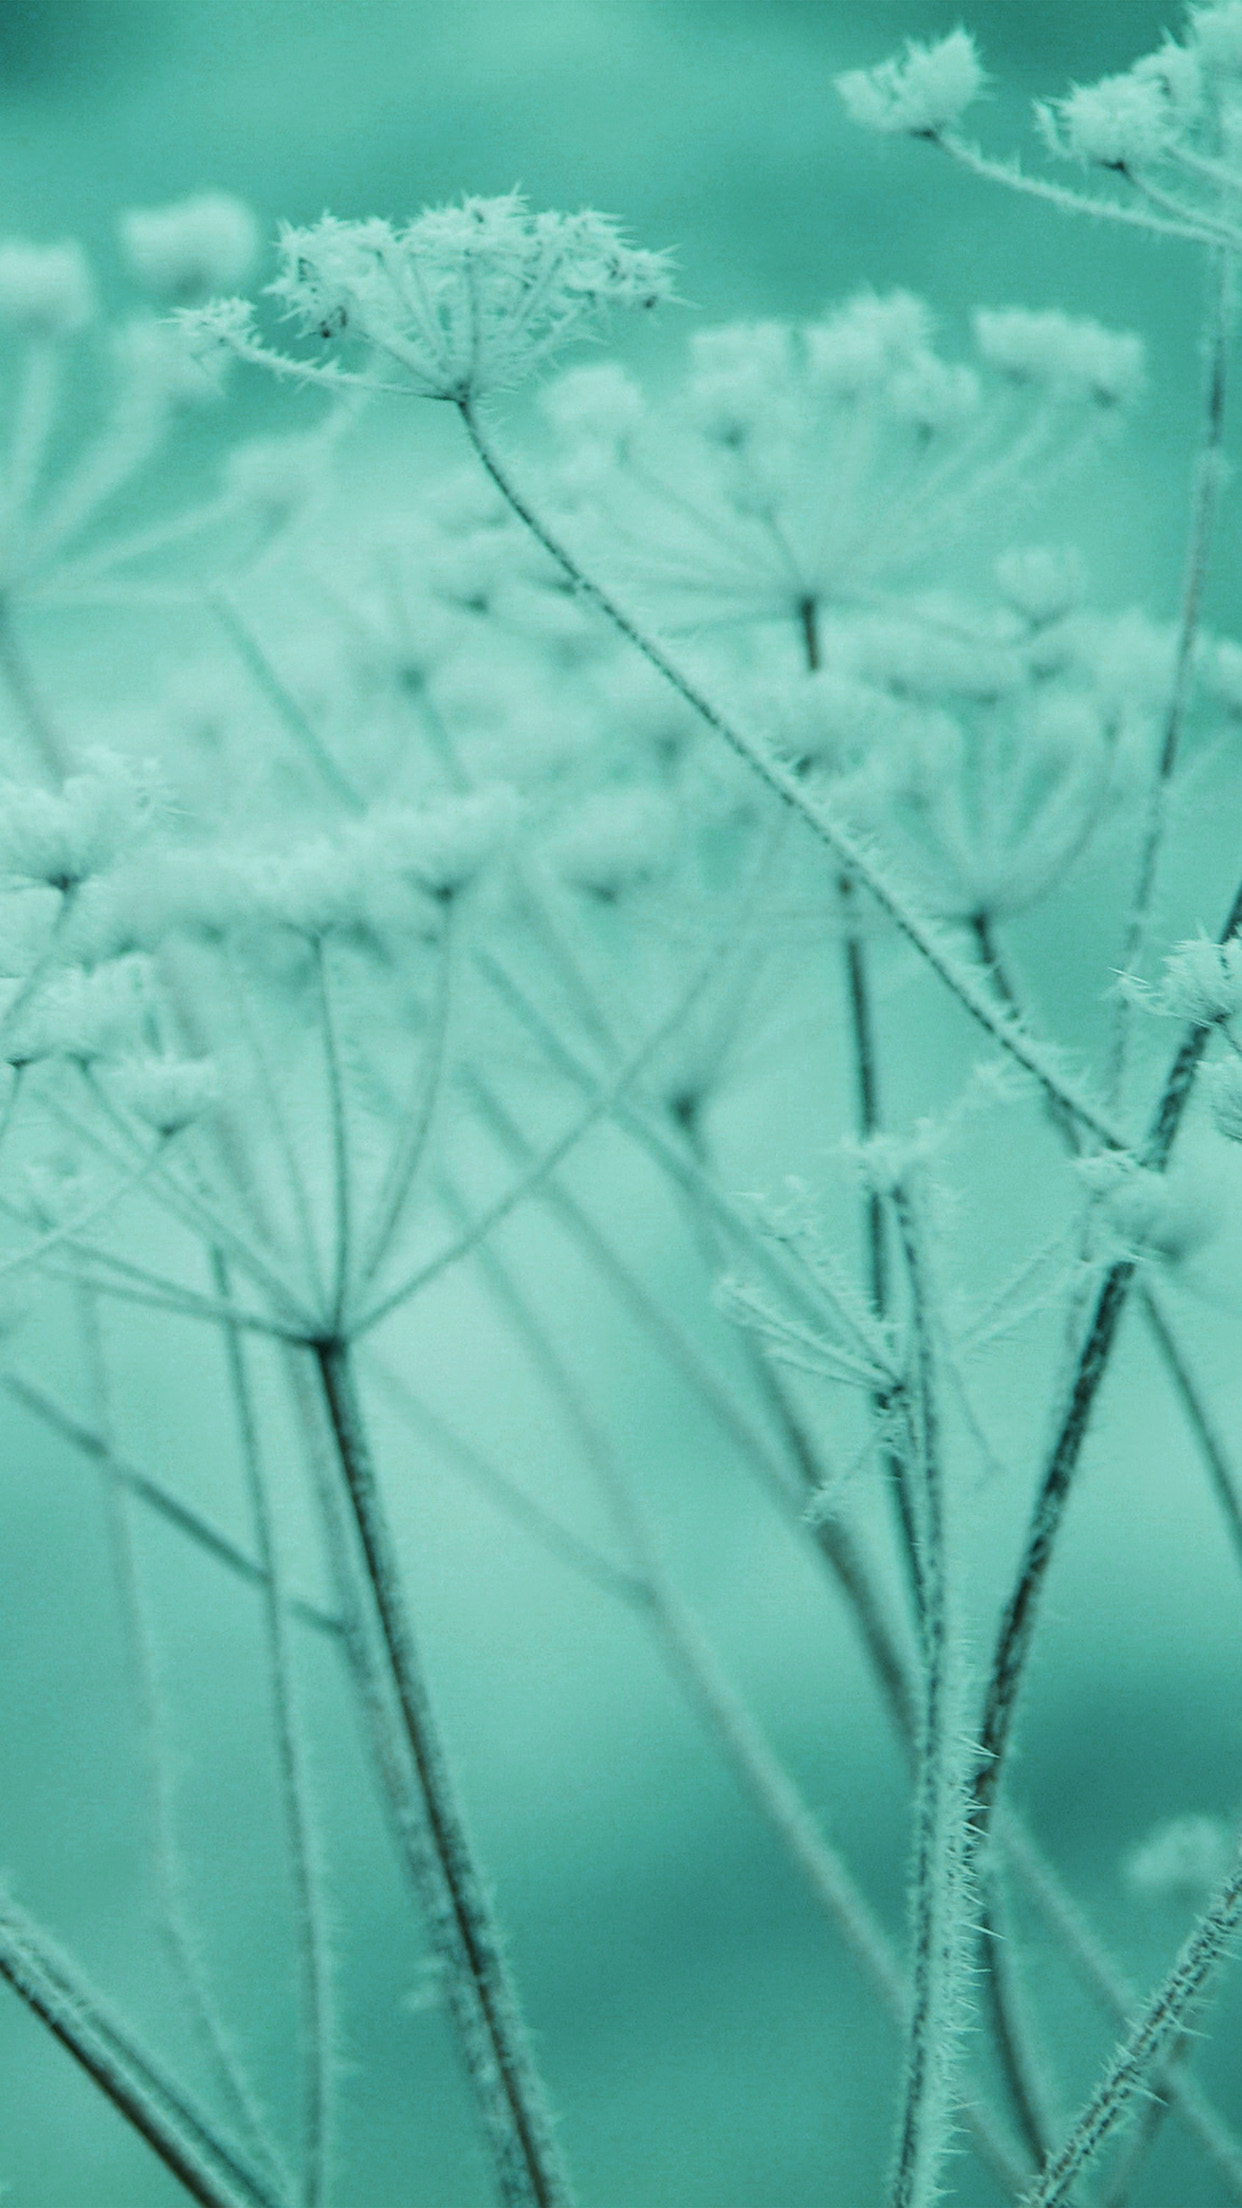 iPhone X wallpaper. ipad snow winter flower green nature bokeh